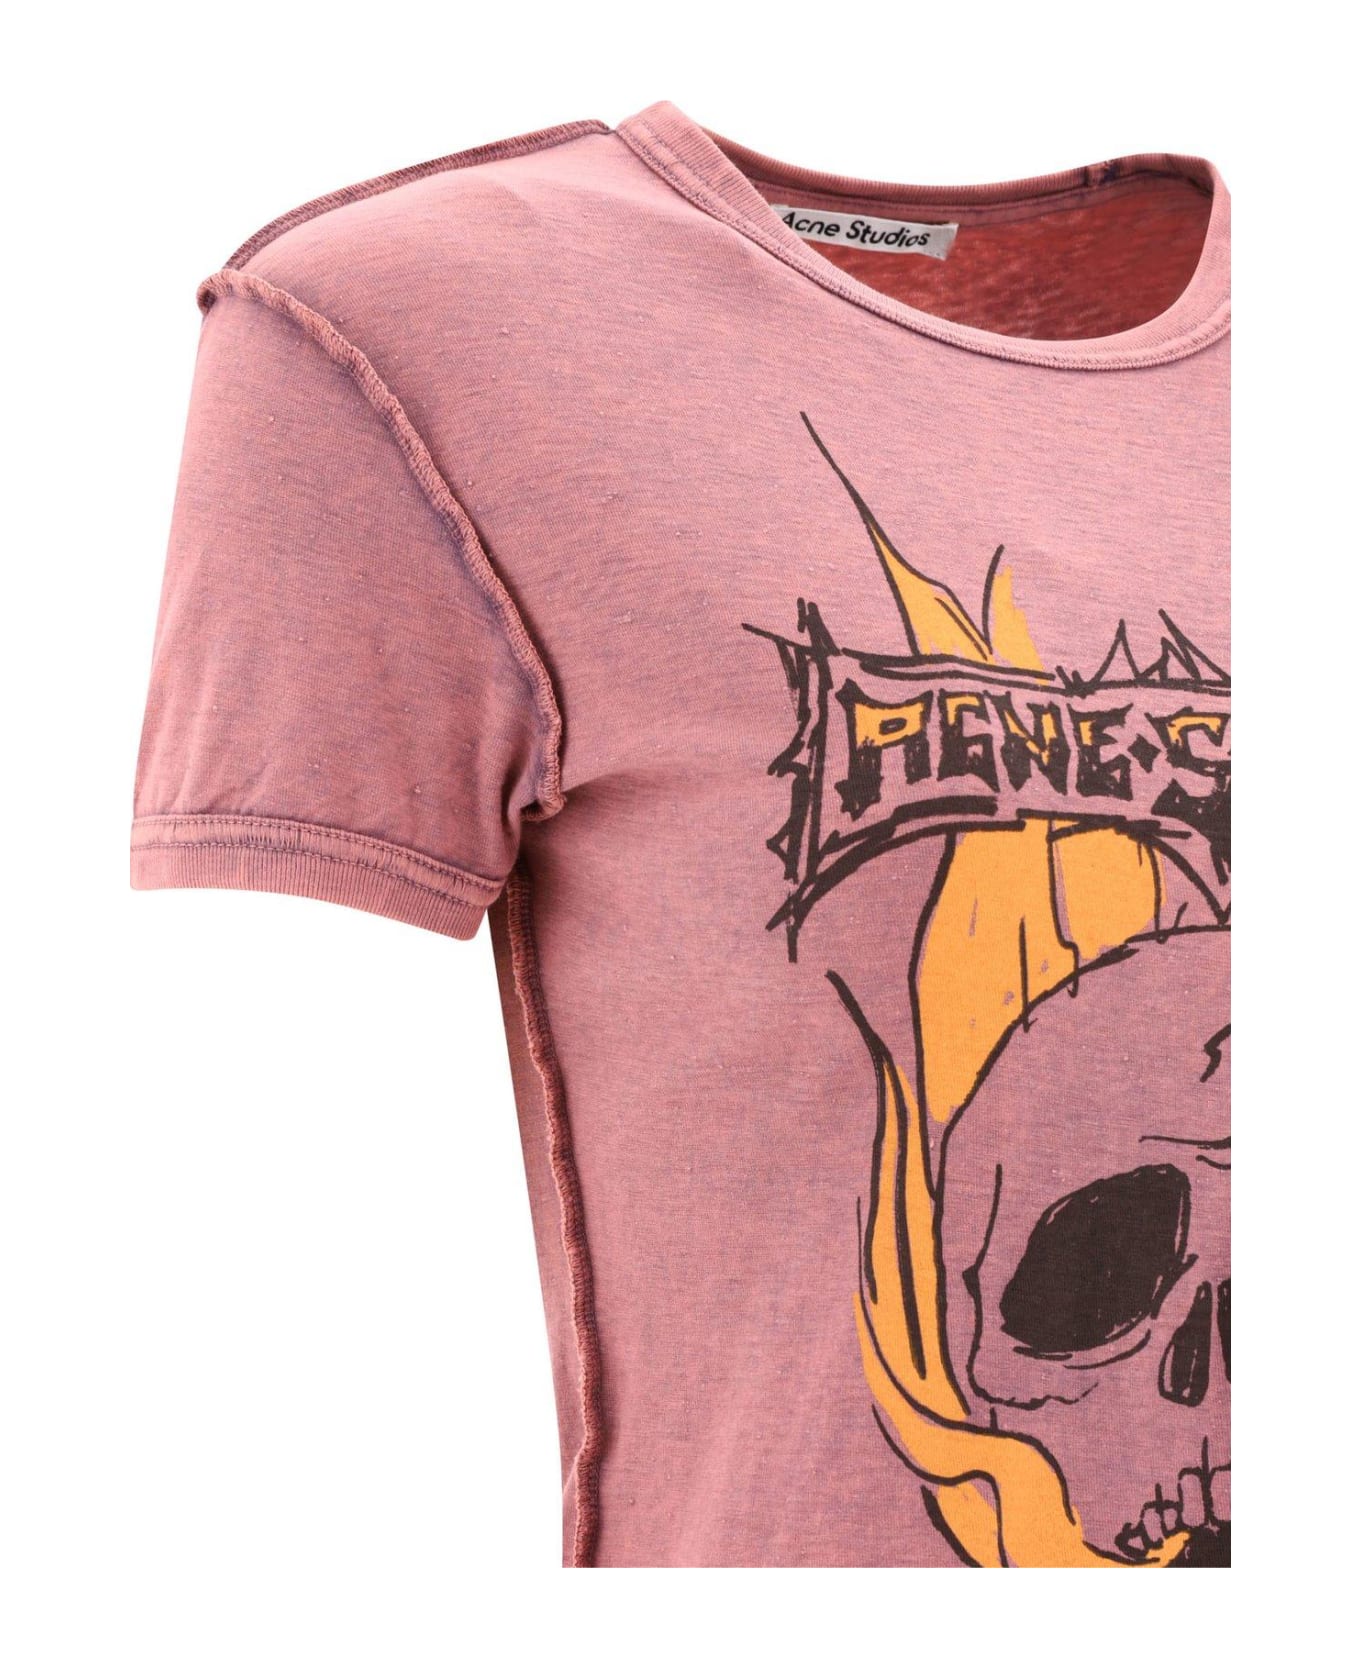 Acne Studios Graphic Printed Crewneck T-shirt - Ctl Mauve Pink